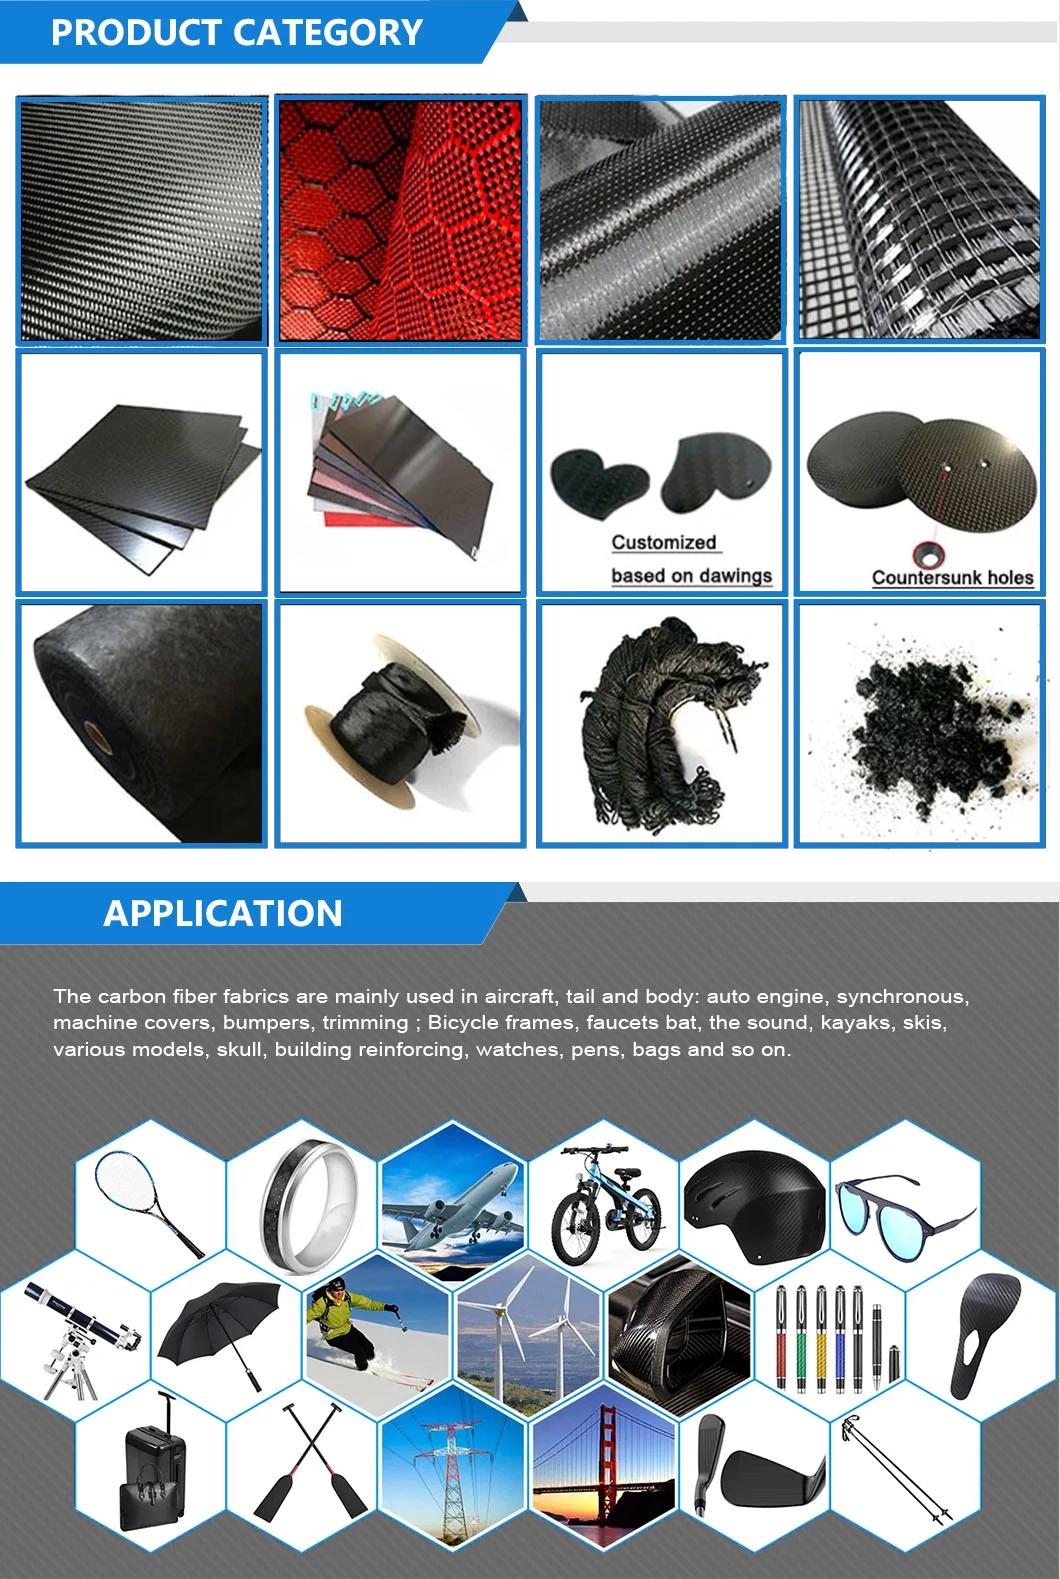 1K 3K 6K 12K Unidirectional/Bi-Directional Plain/Twill/Multiaxial/Ud/CNC/Prepreg/Jacquard Carbon Fiber Fabric Cloth for Automotive/Construction/Leisure Industry